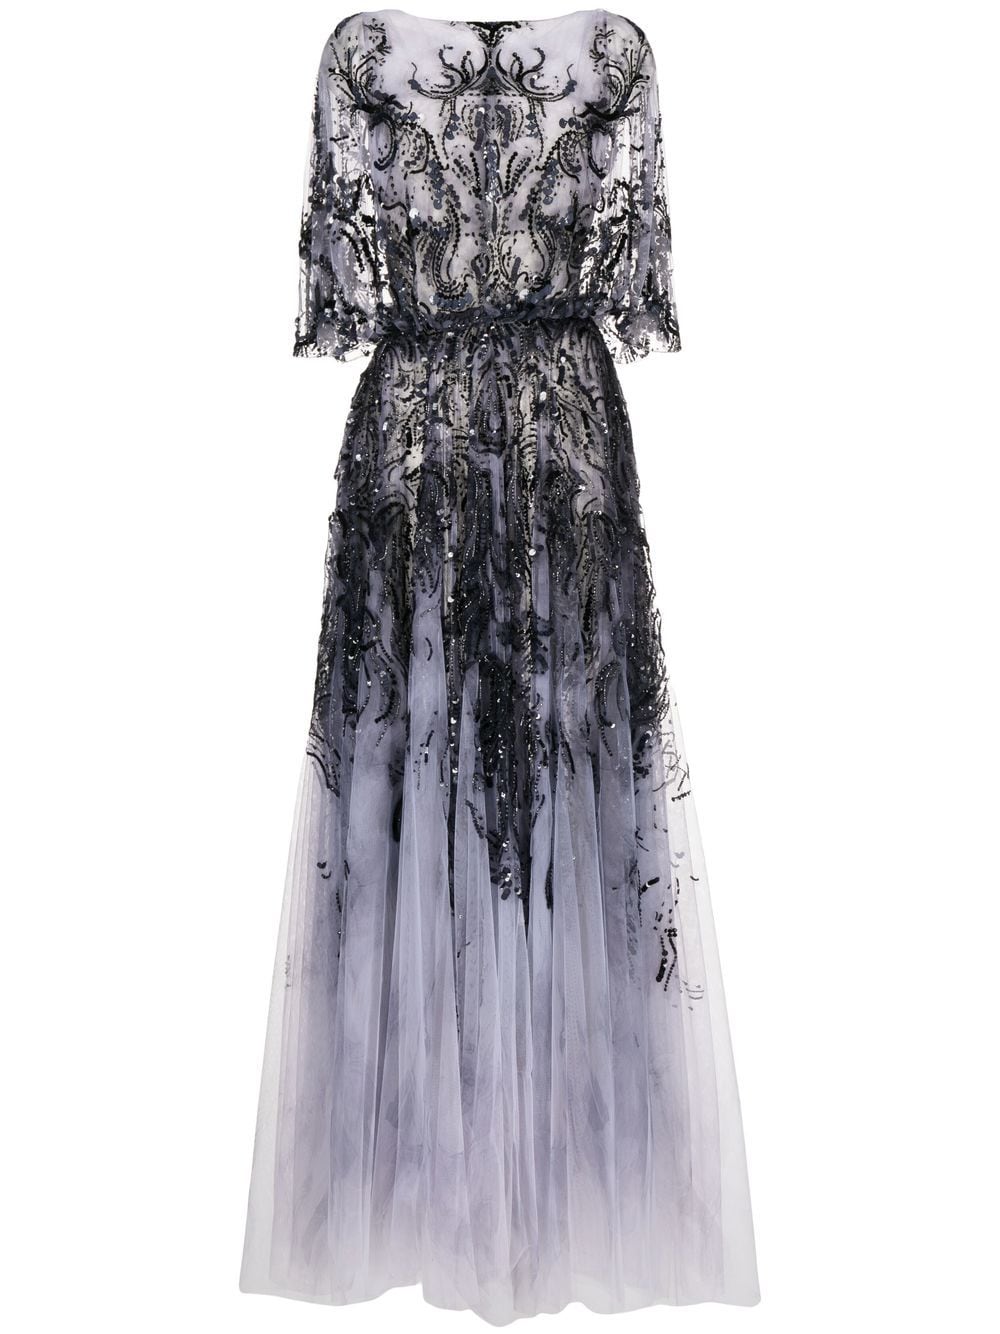 Saiid Kobeisy Printed Beaded Evening Dress In Black